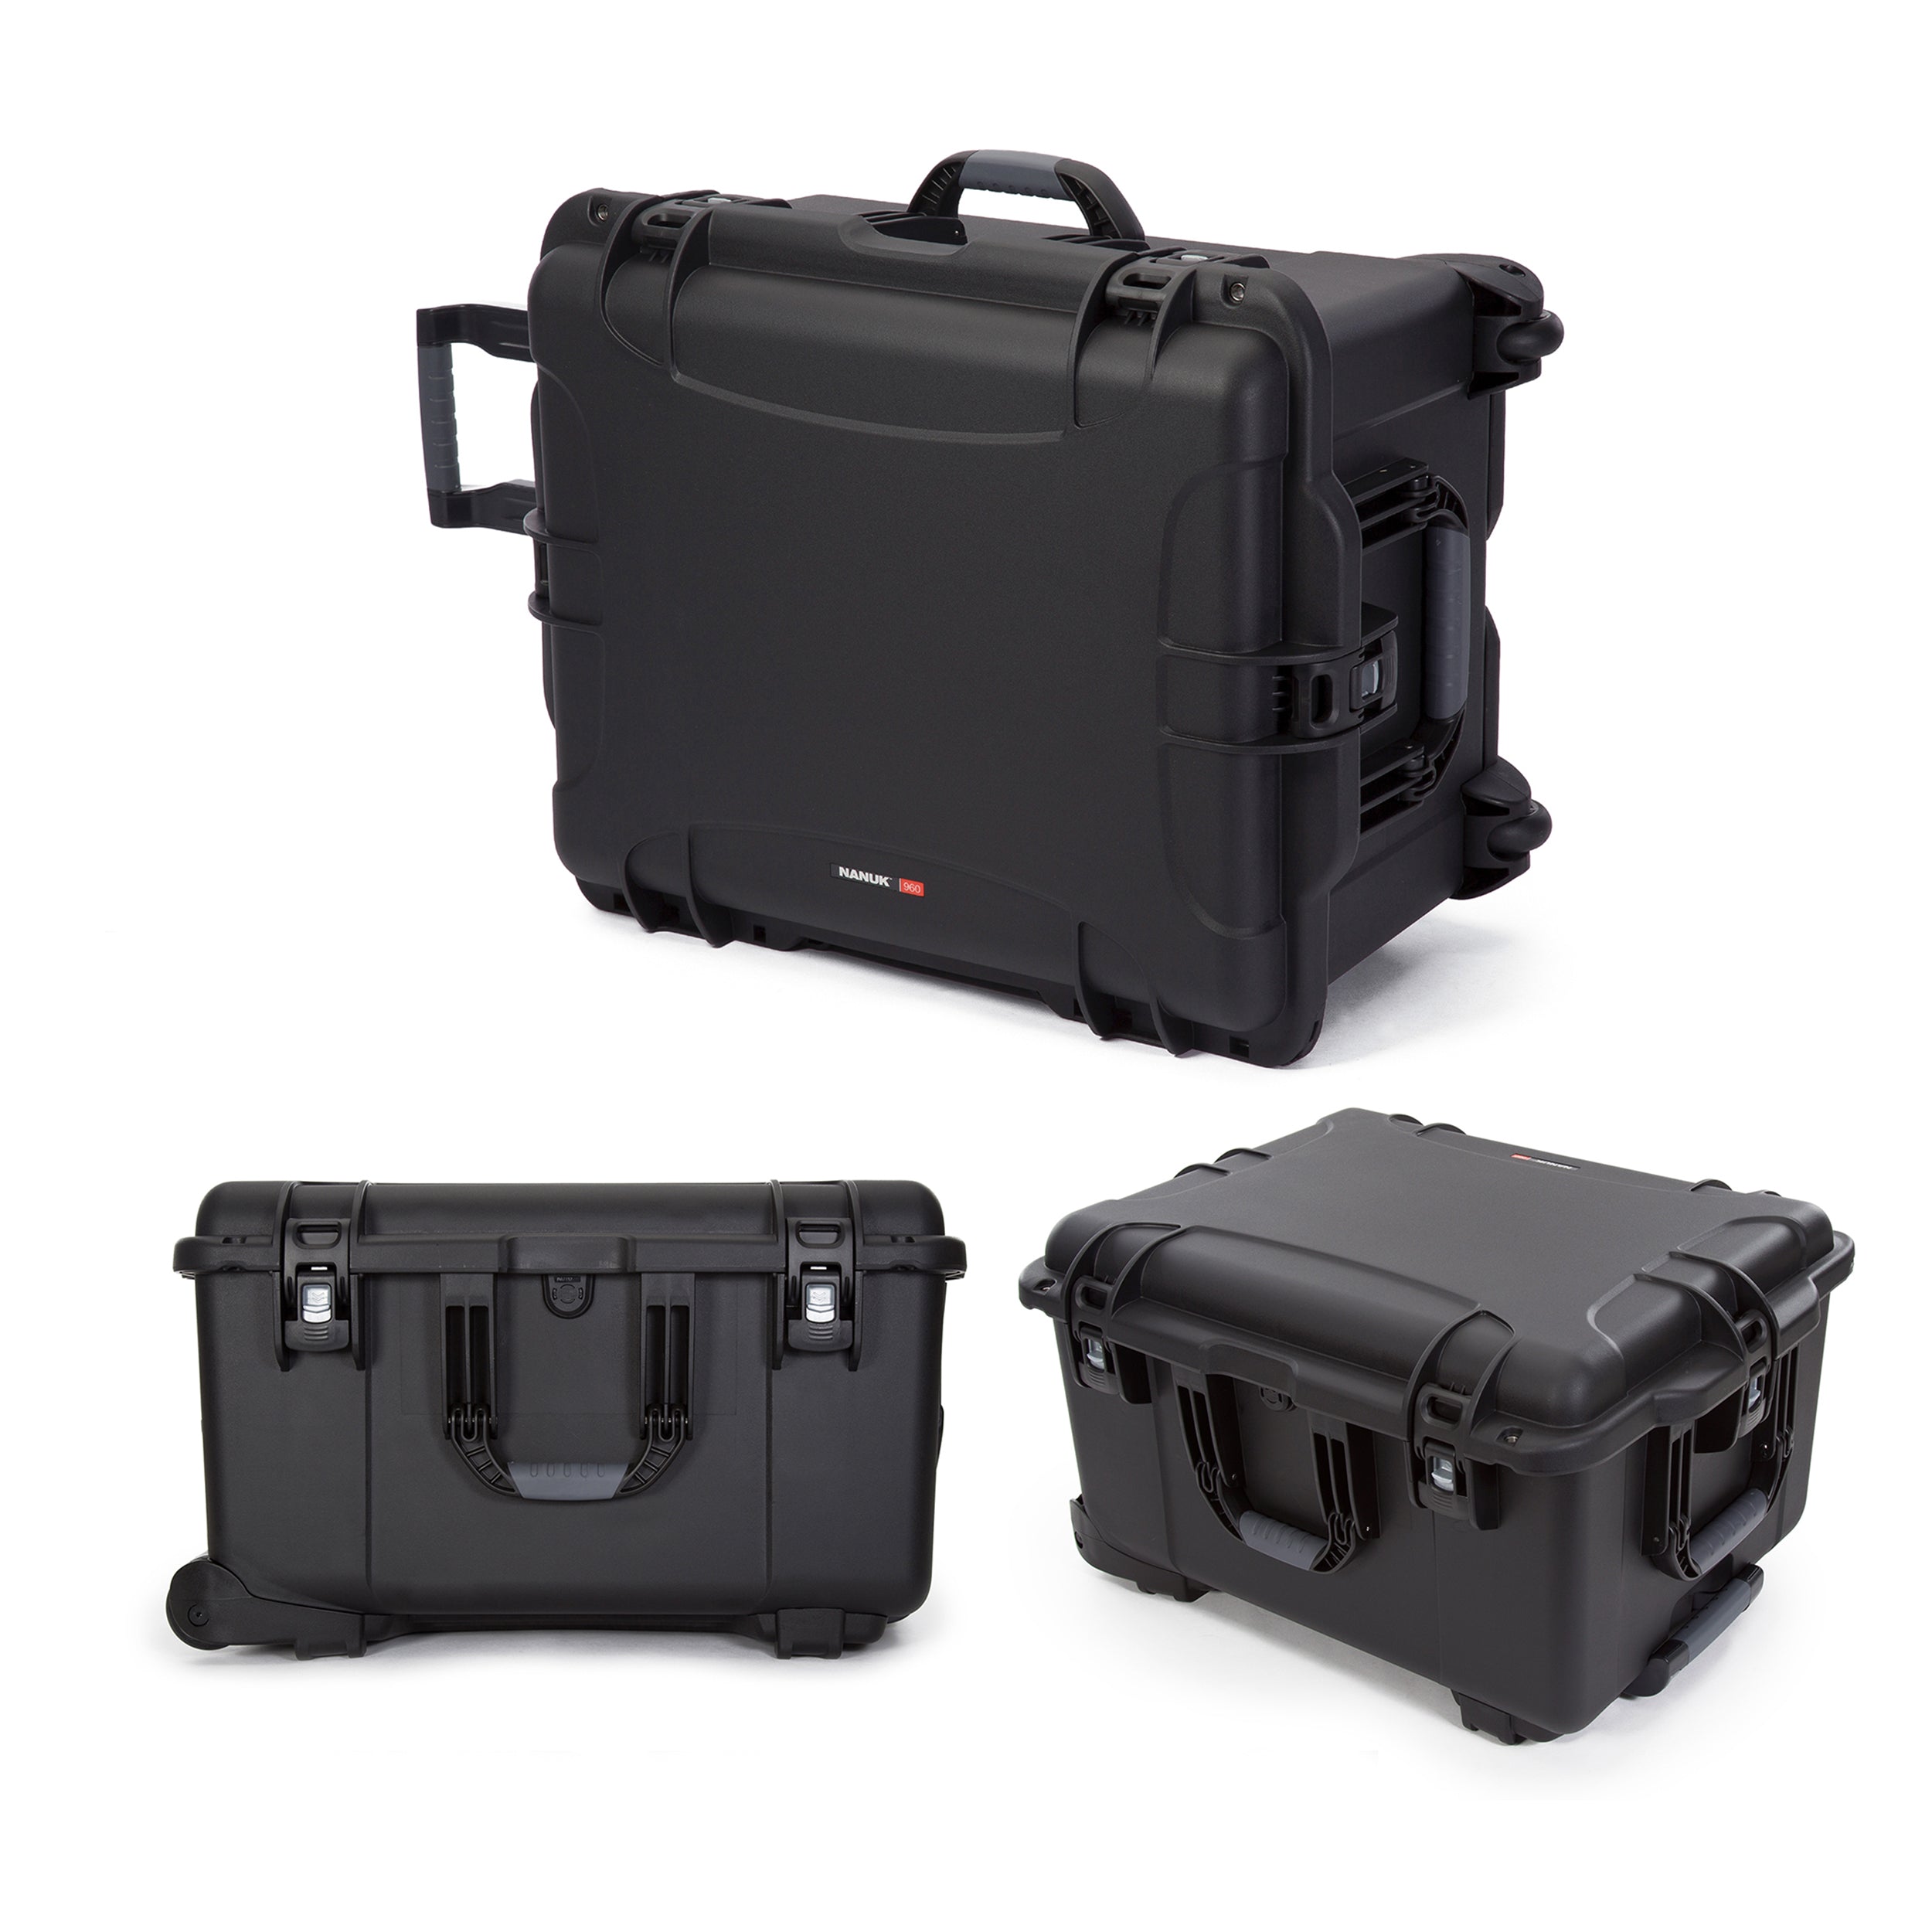 Nanuk Ronin MX Waterproof Hard Case with Wheels and Custom Foam Insert for Ronin MX Gimbal Stabilizer Systems - Black